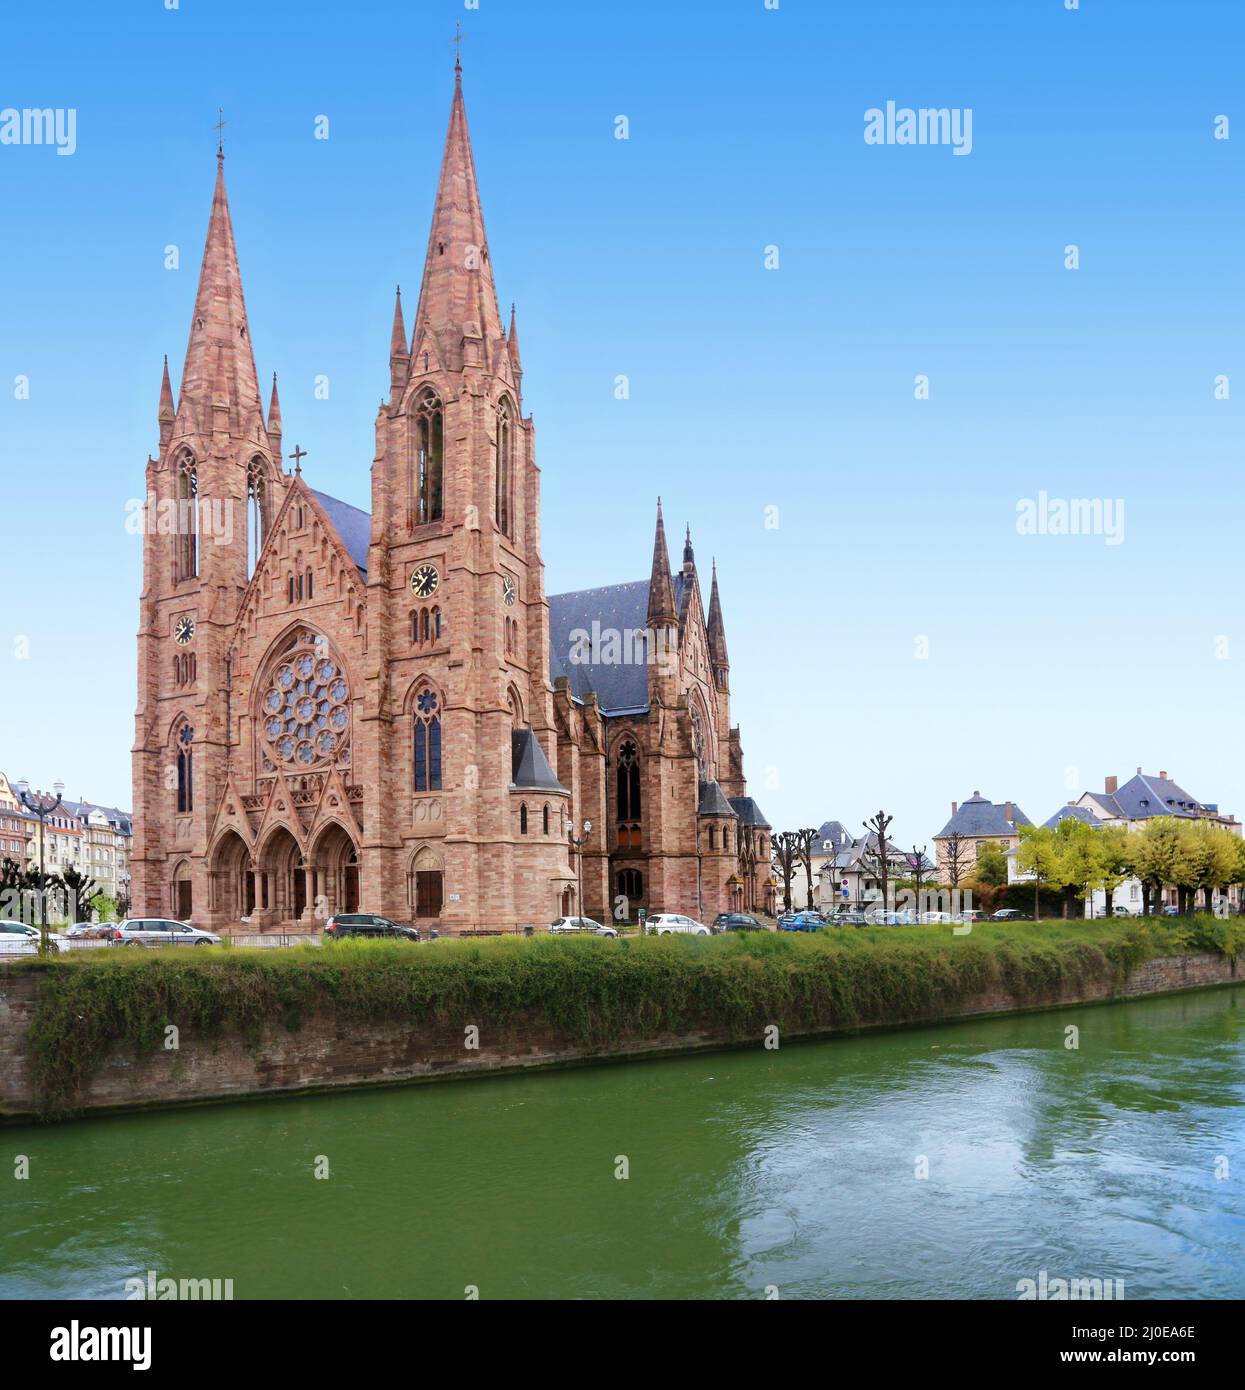 The Saint Paul de Strasbourg church on the edge of the ill. Stock Photo